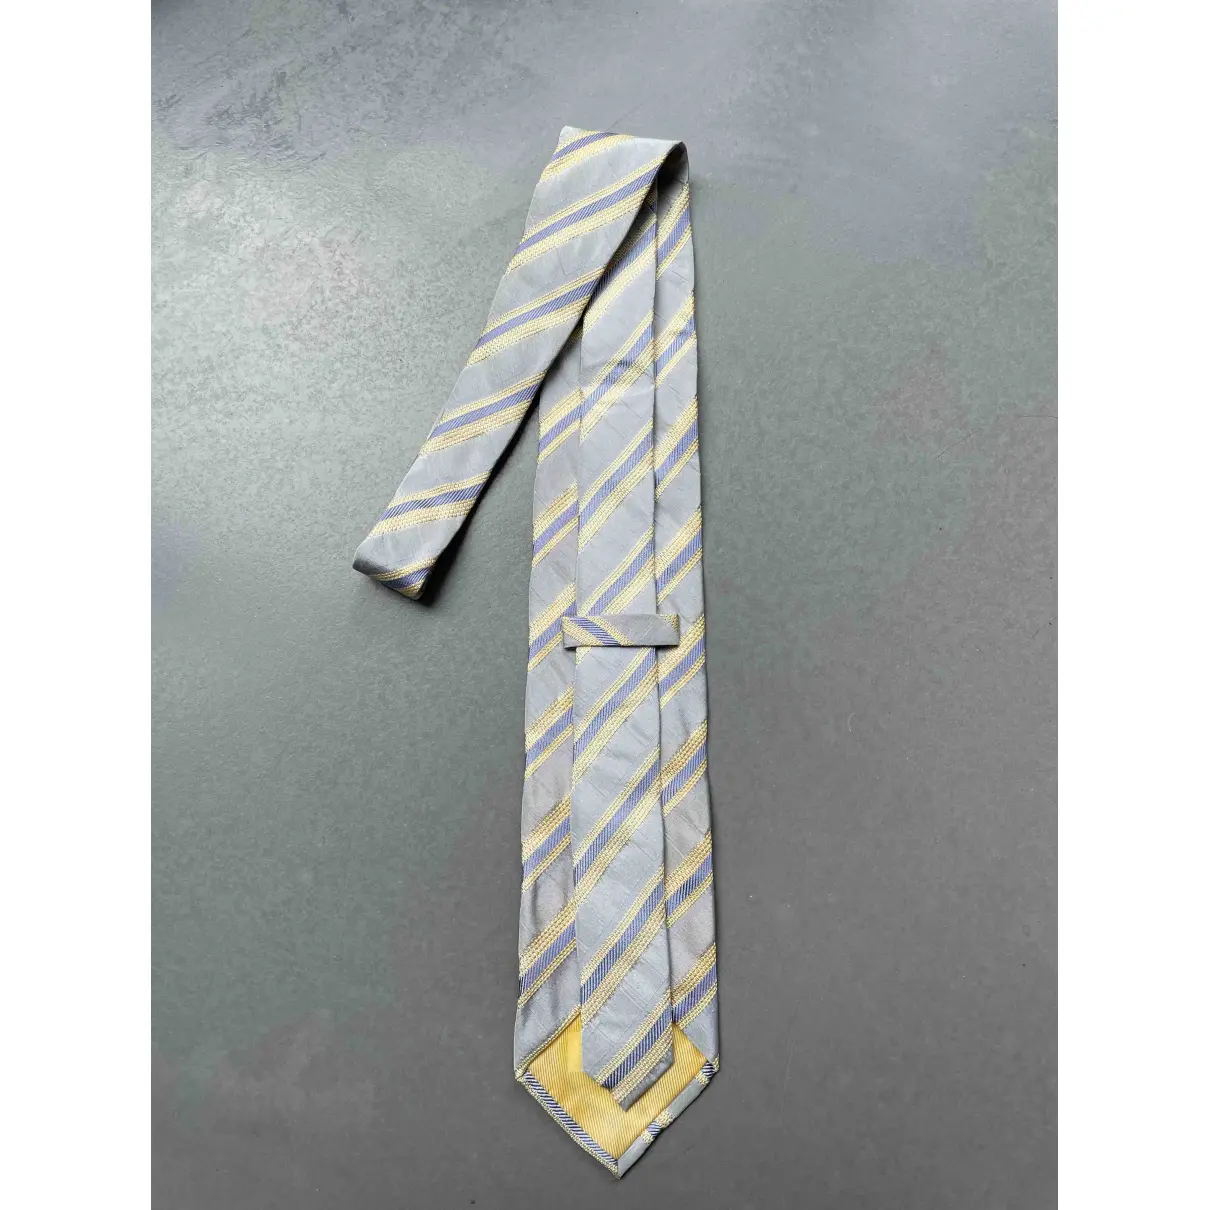 Buy Baldessarini Silk tie online